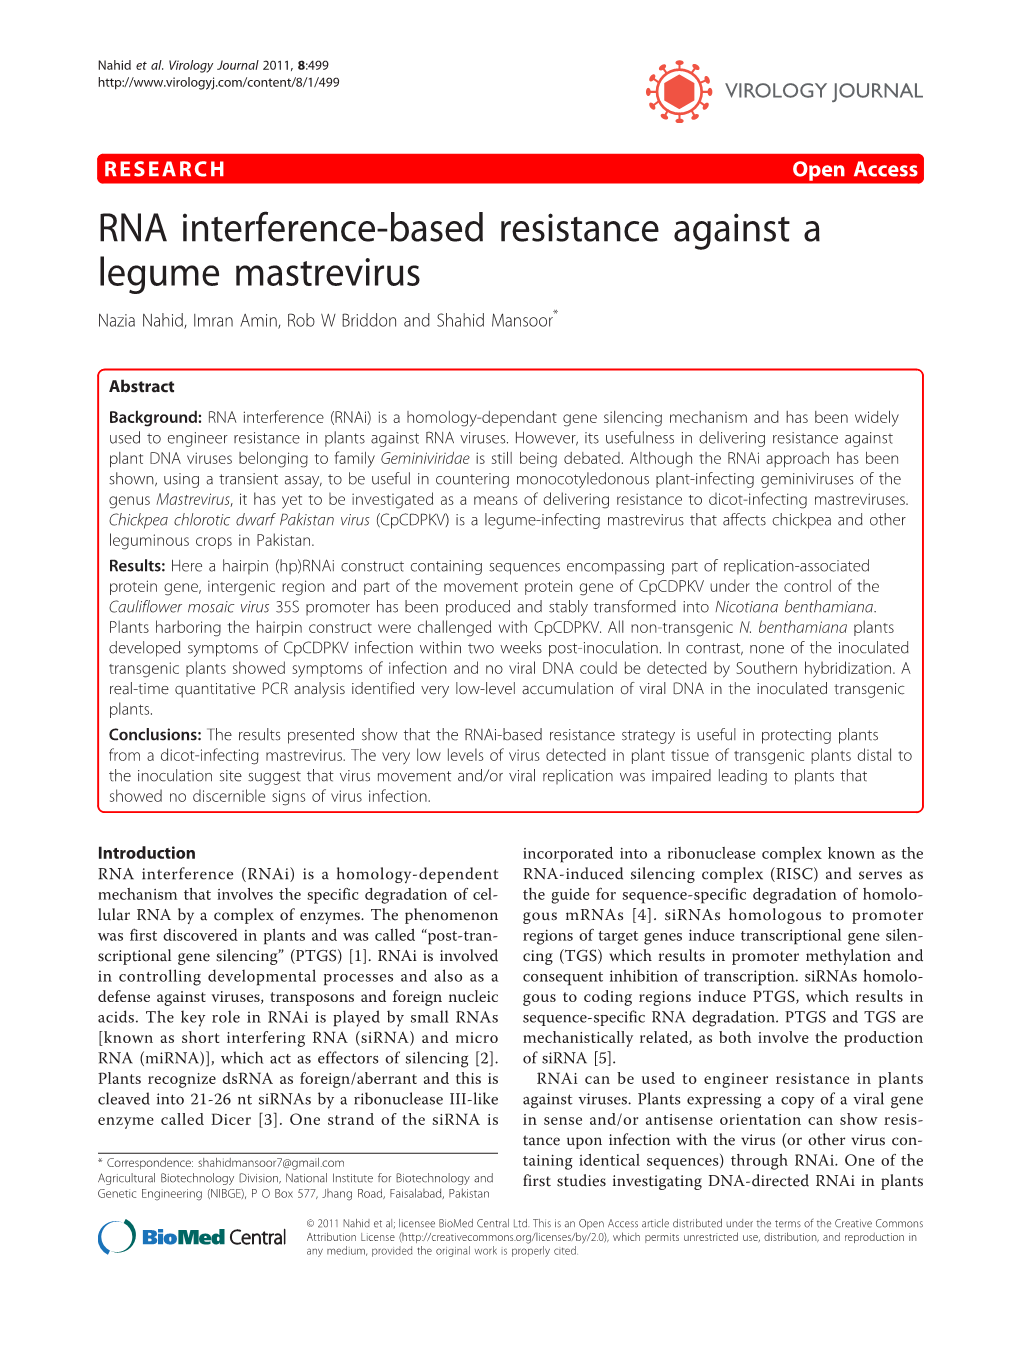 RNA Interference-Based Resistance Against a Legume Mastrevirus Nazia Nahid, Imran Amin, Rob W Briddon and Shahid Mansoor*